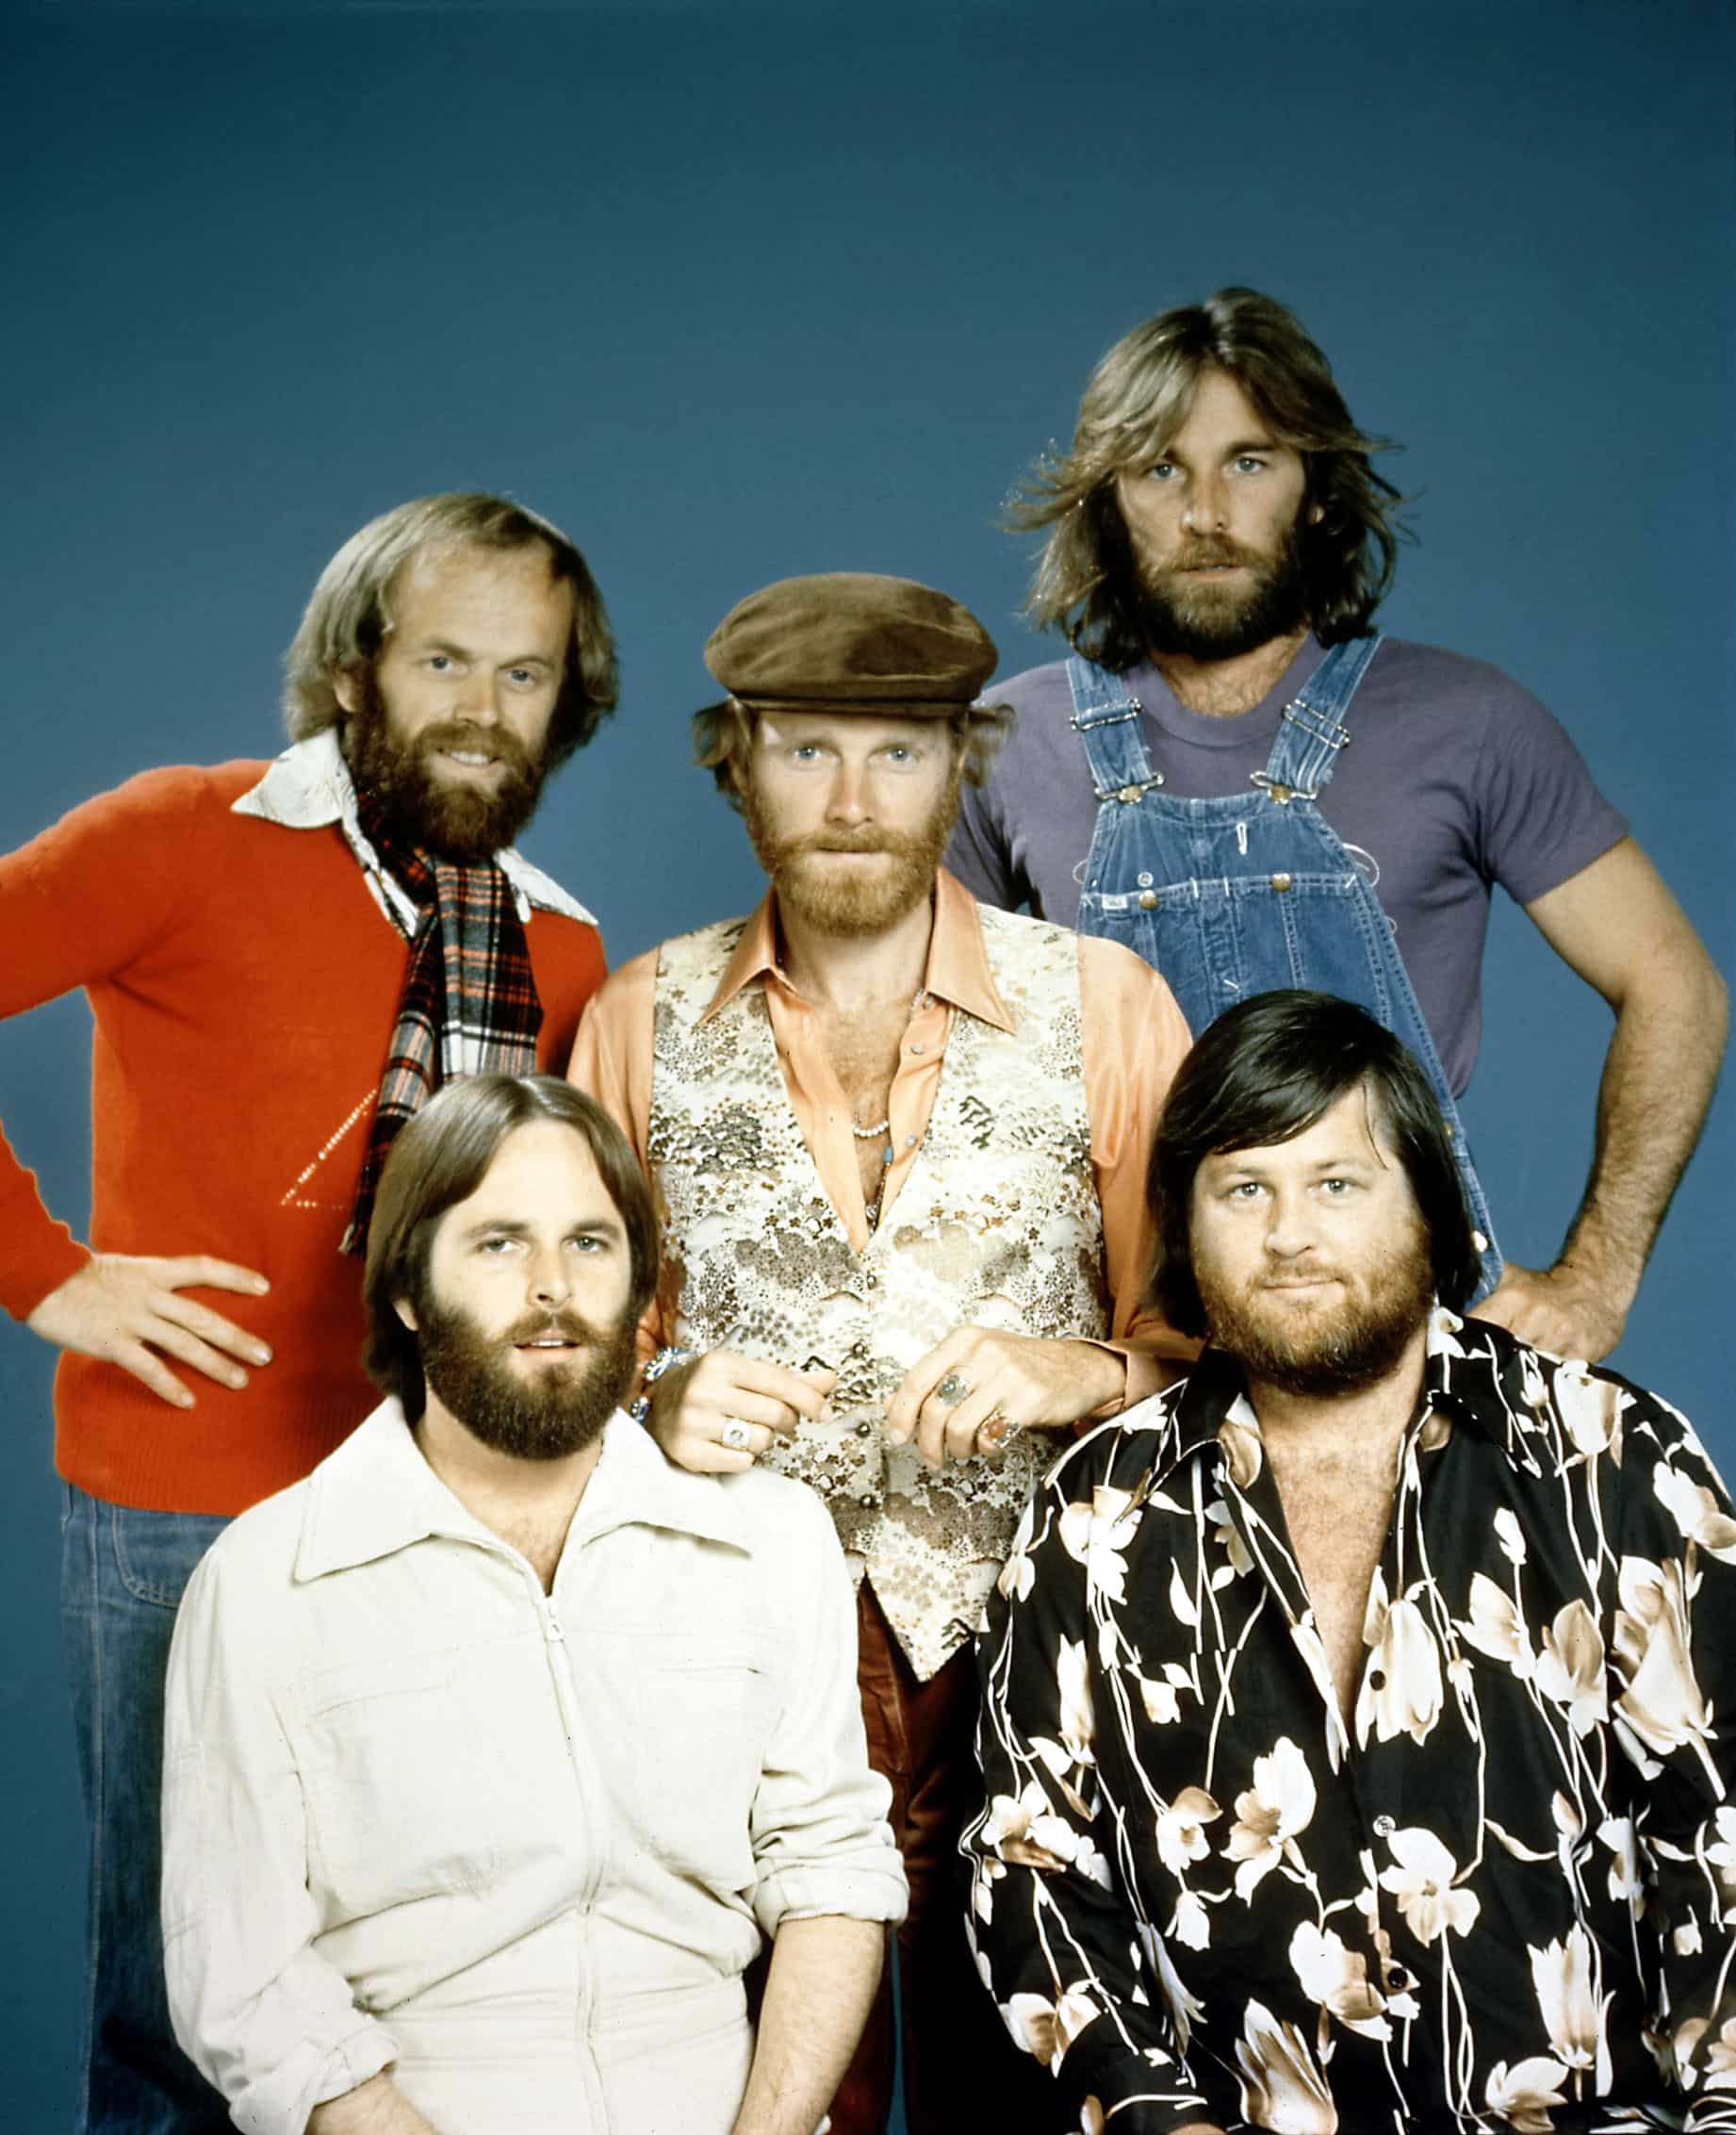 THE BEACH BOYS, Dennis Wilson (standing), and (counter clockwise), Brian Wilson, Carl Wilson, Al Jardine and Mike Love, 1976